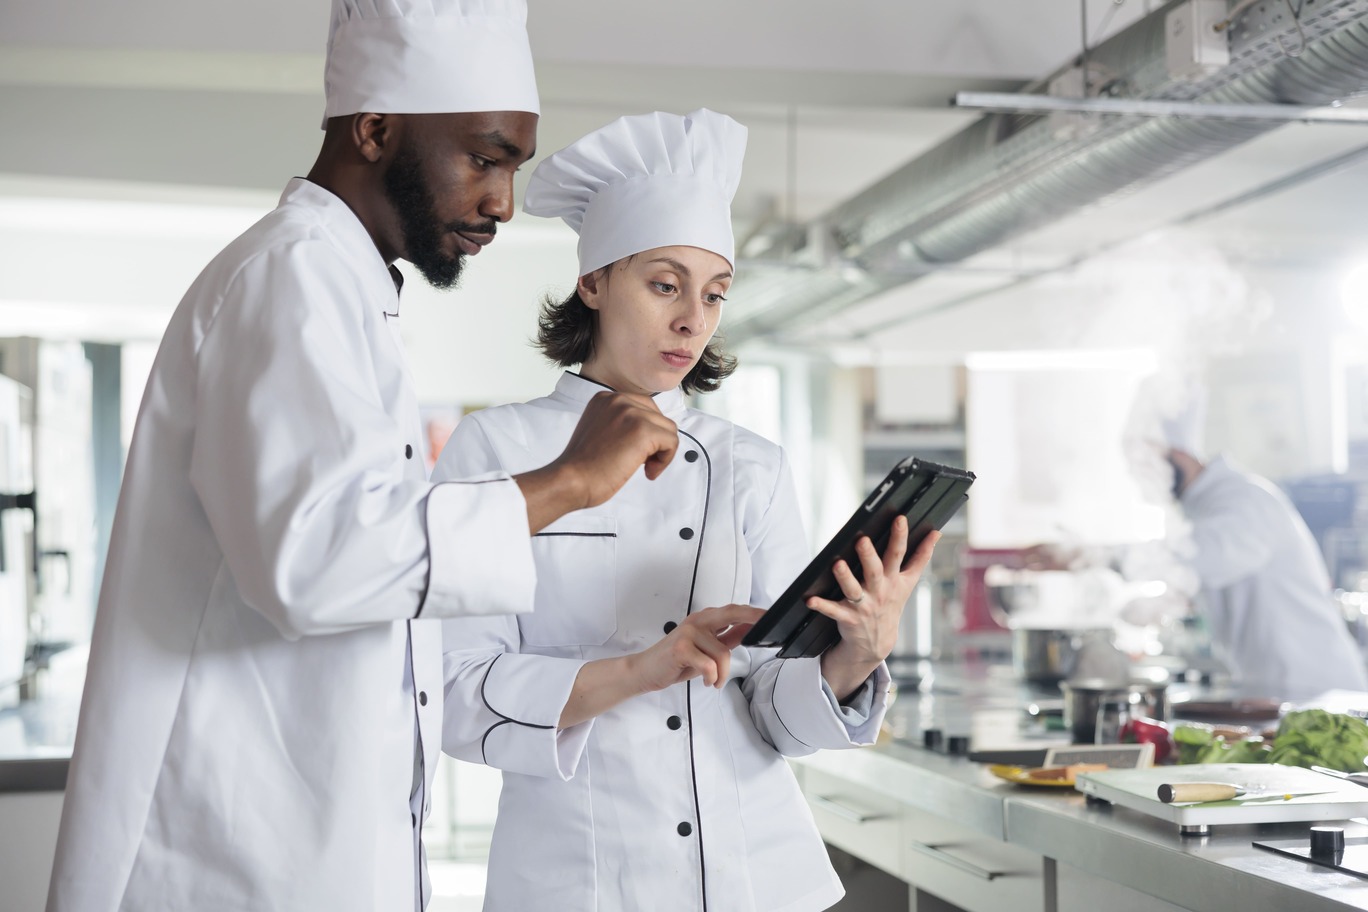 chefs profesionales dispositivo inalambrico pantalla tactil que preparan ingredientes concurso comida que lleva cabo restaurante expertos cocina gourmet tabletas modernas qu